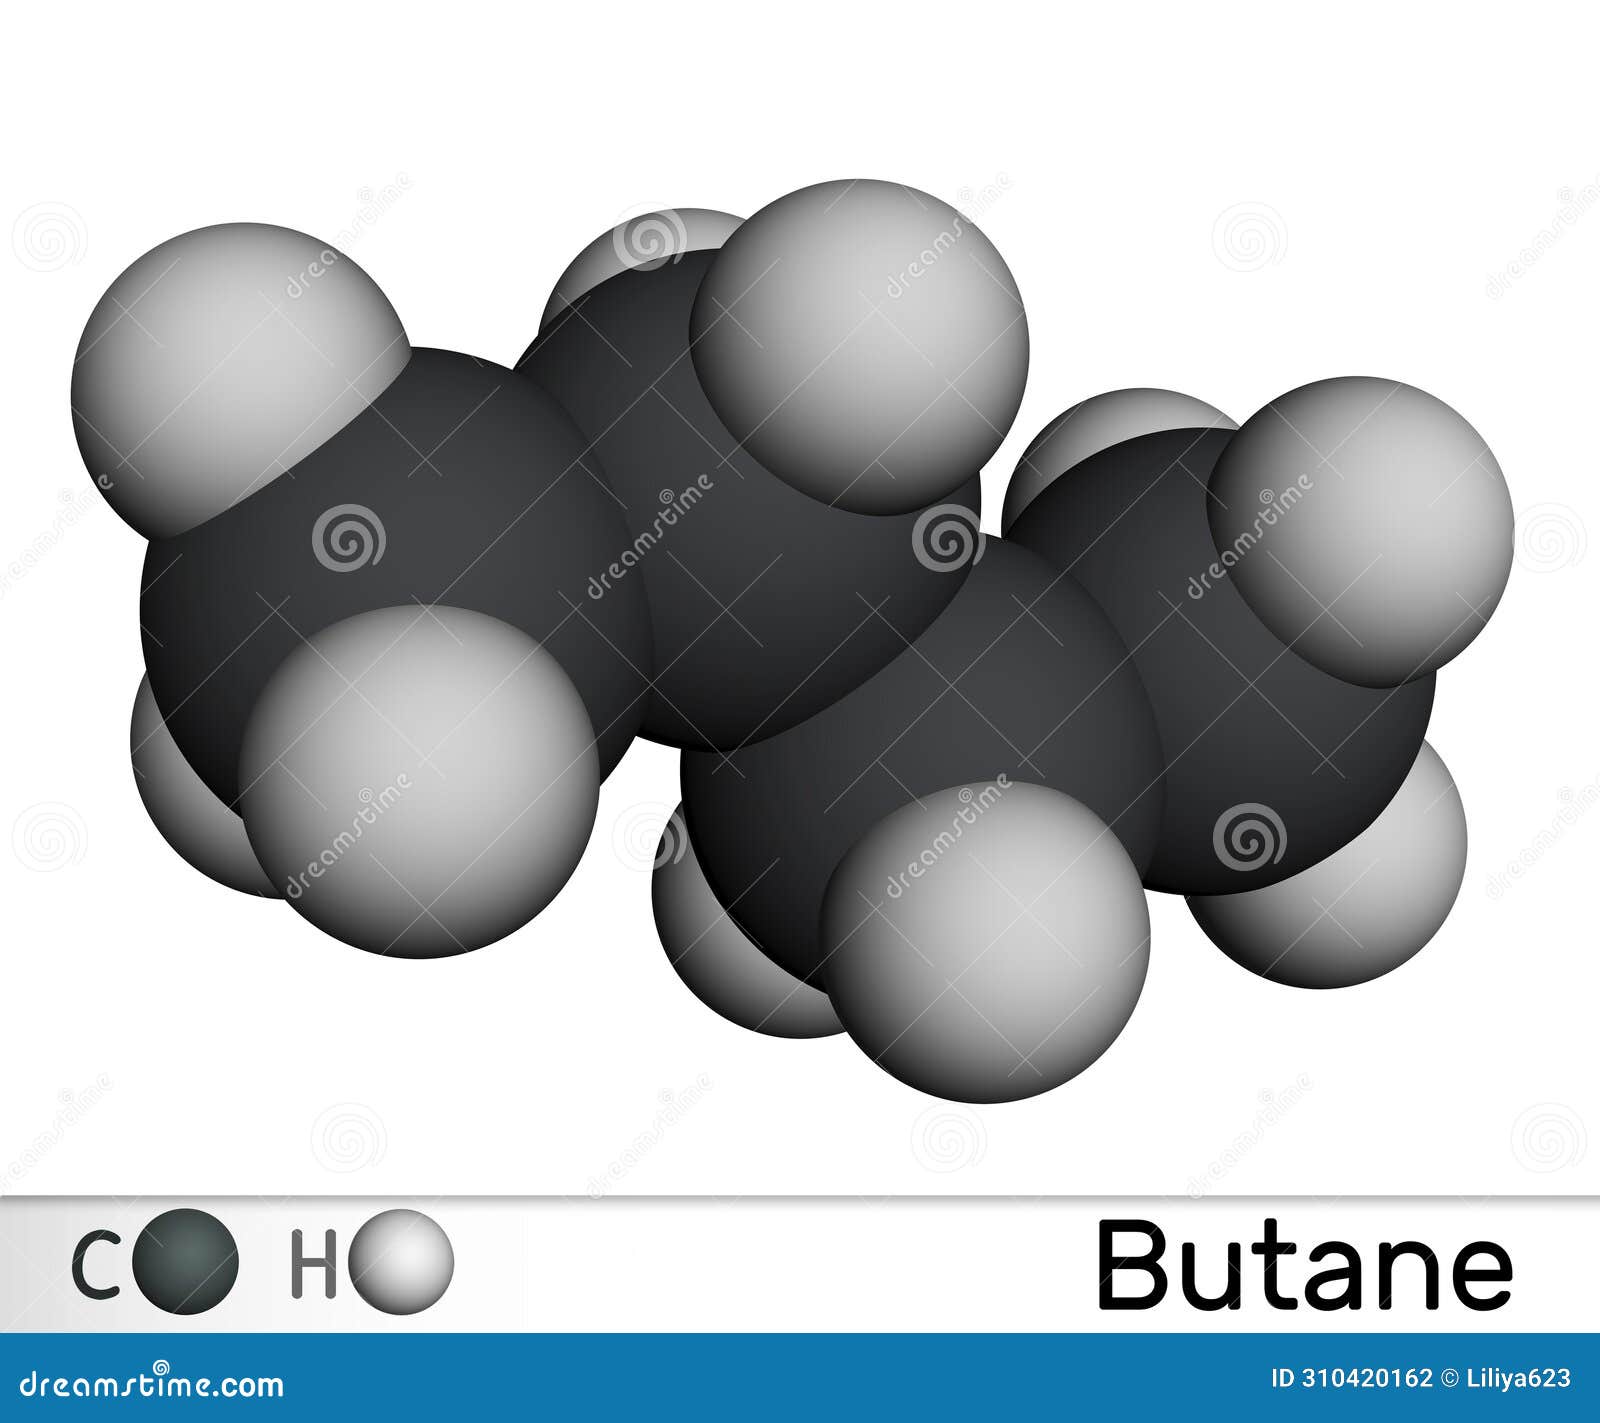 butane c4h10 alkane molecule. molecular model. 3d rendering